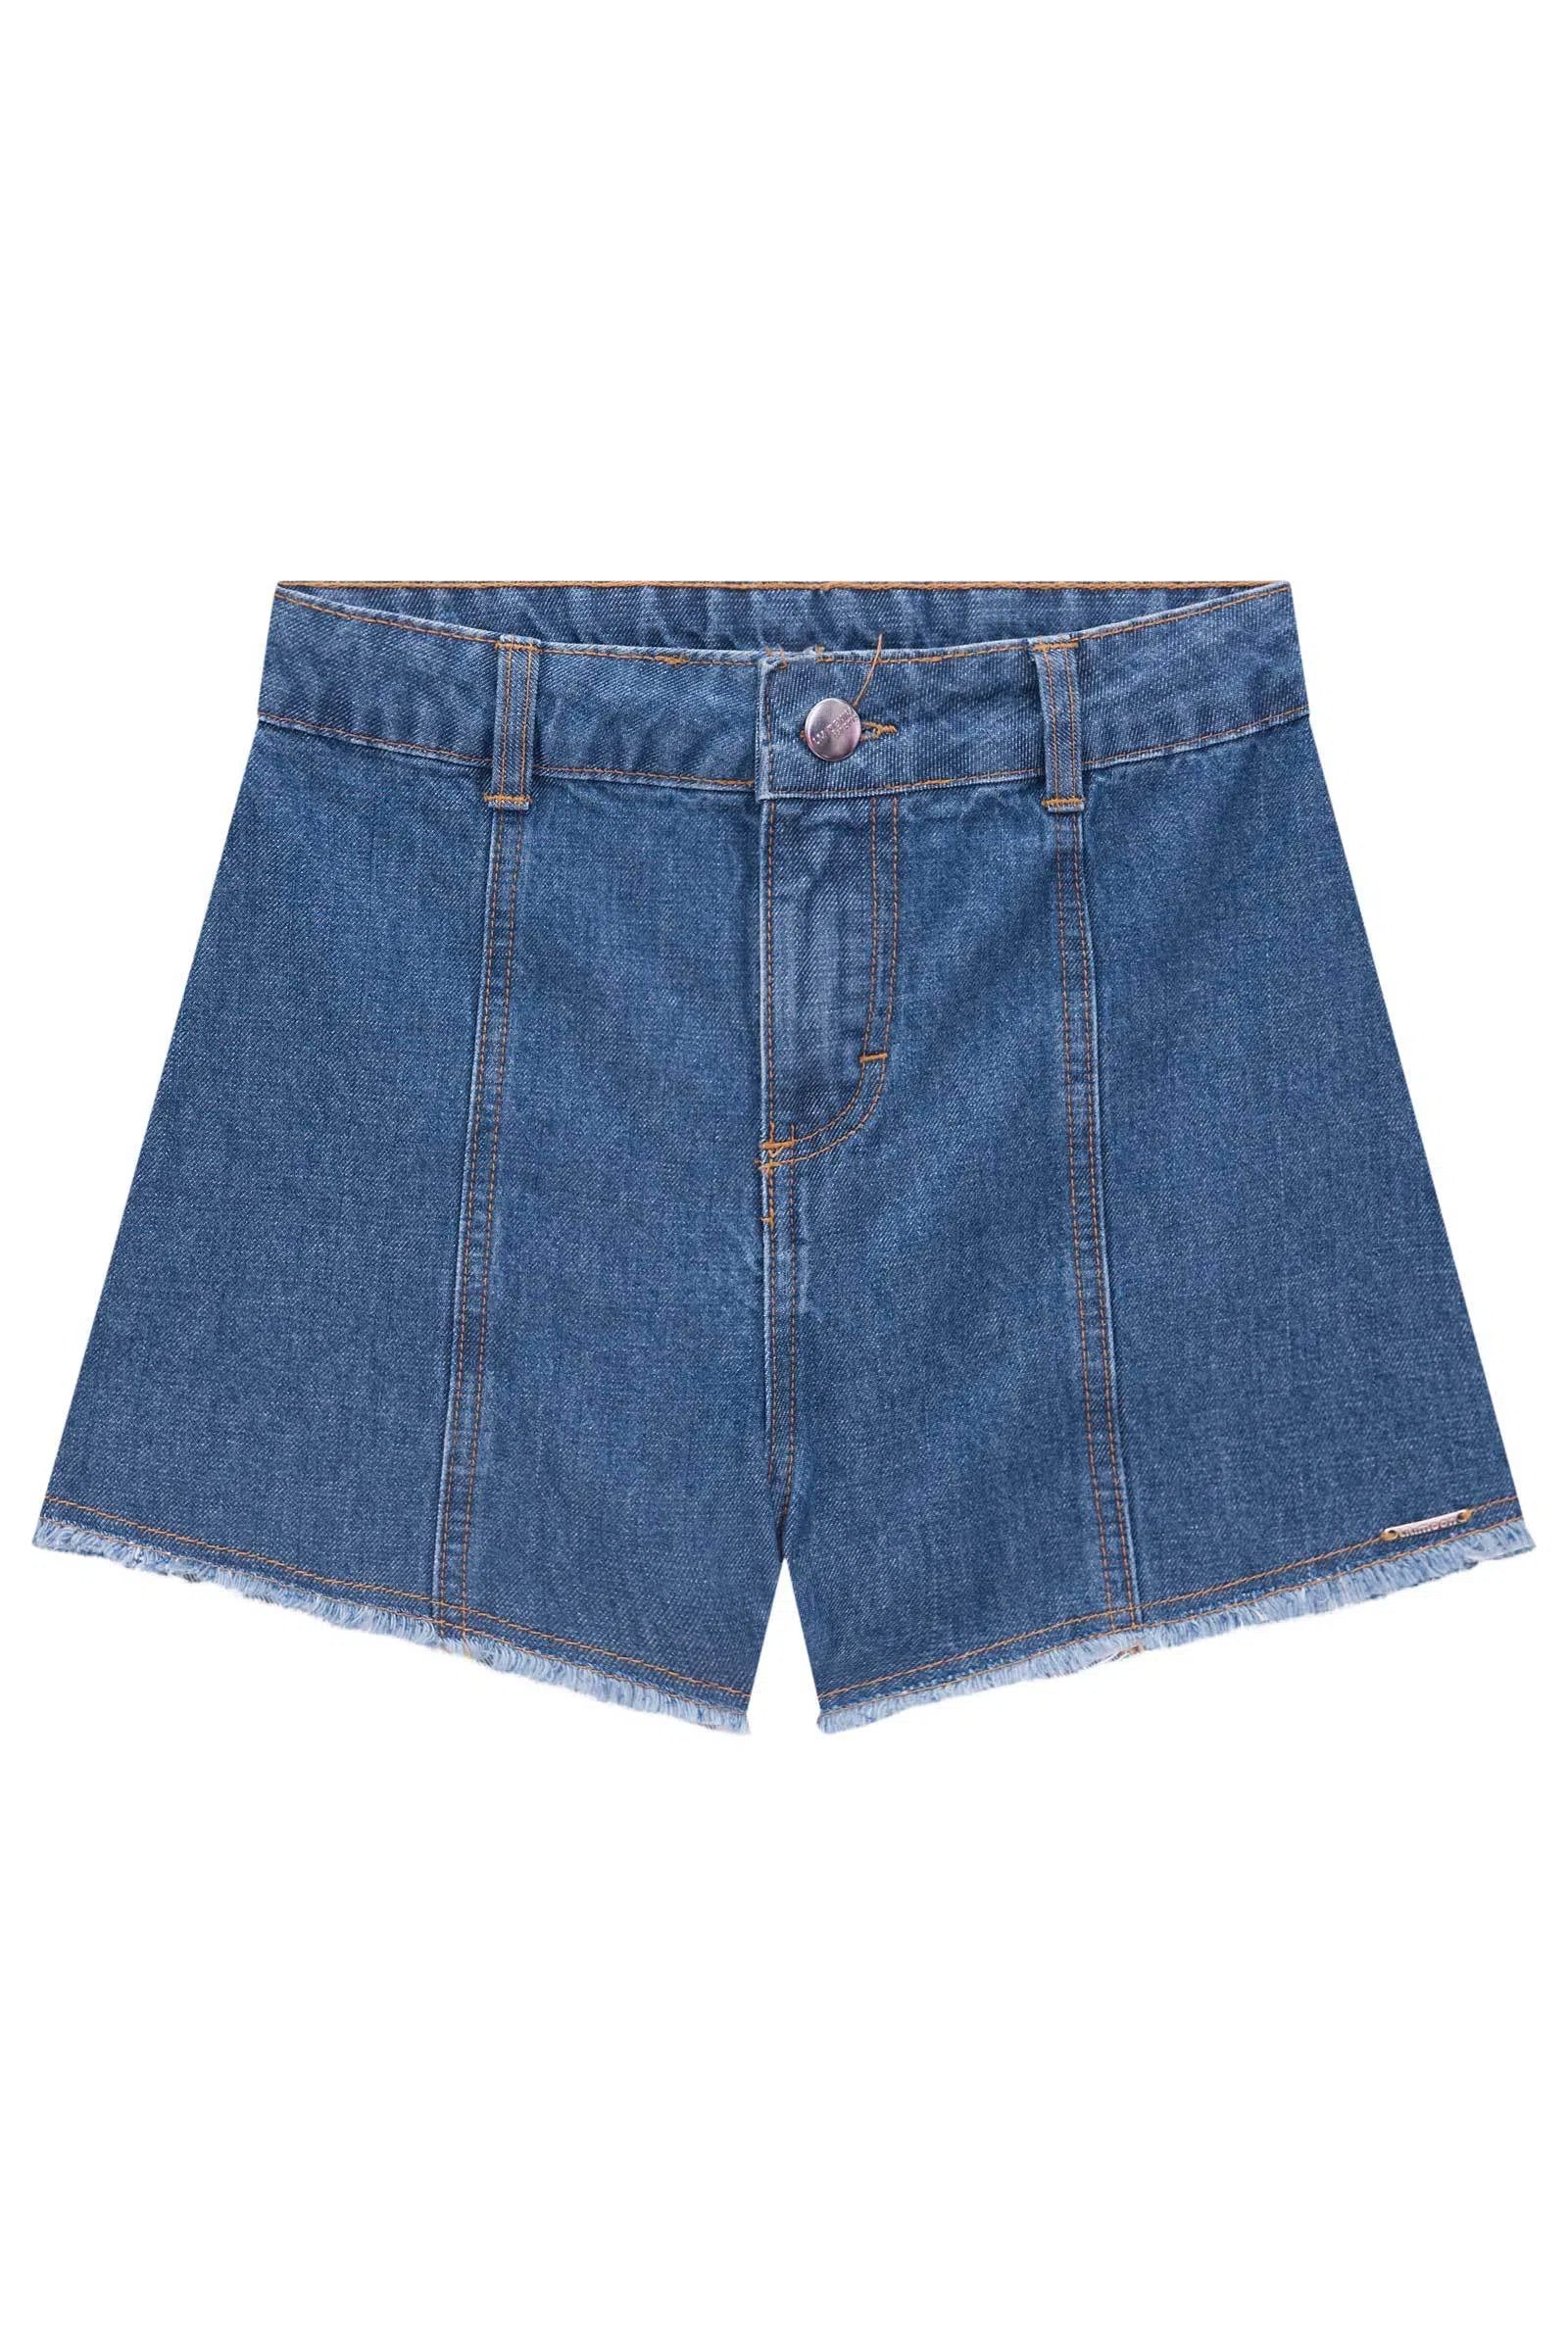 Shorts em Jeans Arkansas 71300 Lilimoon